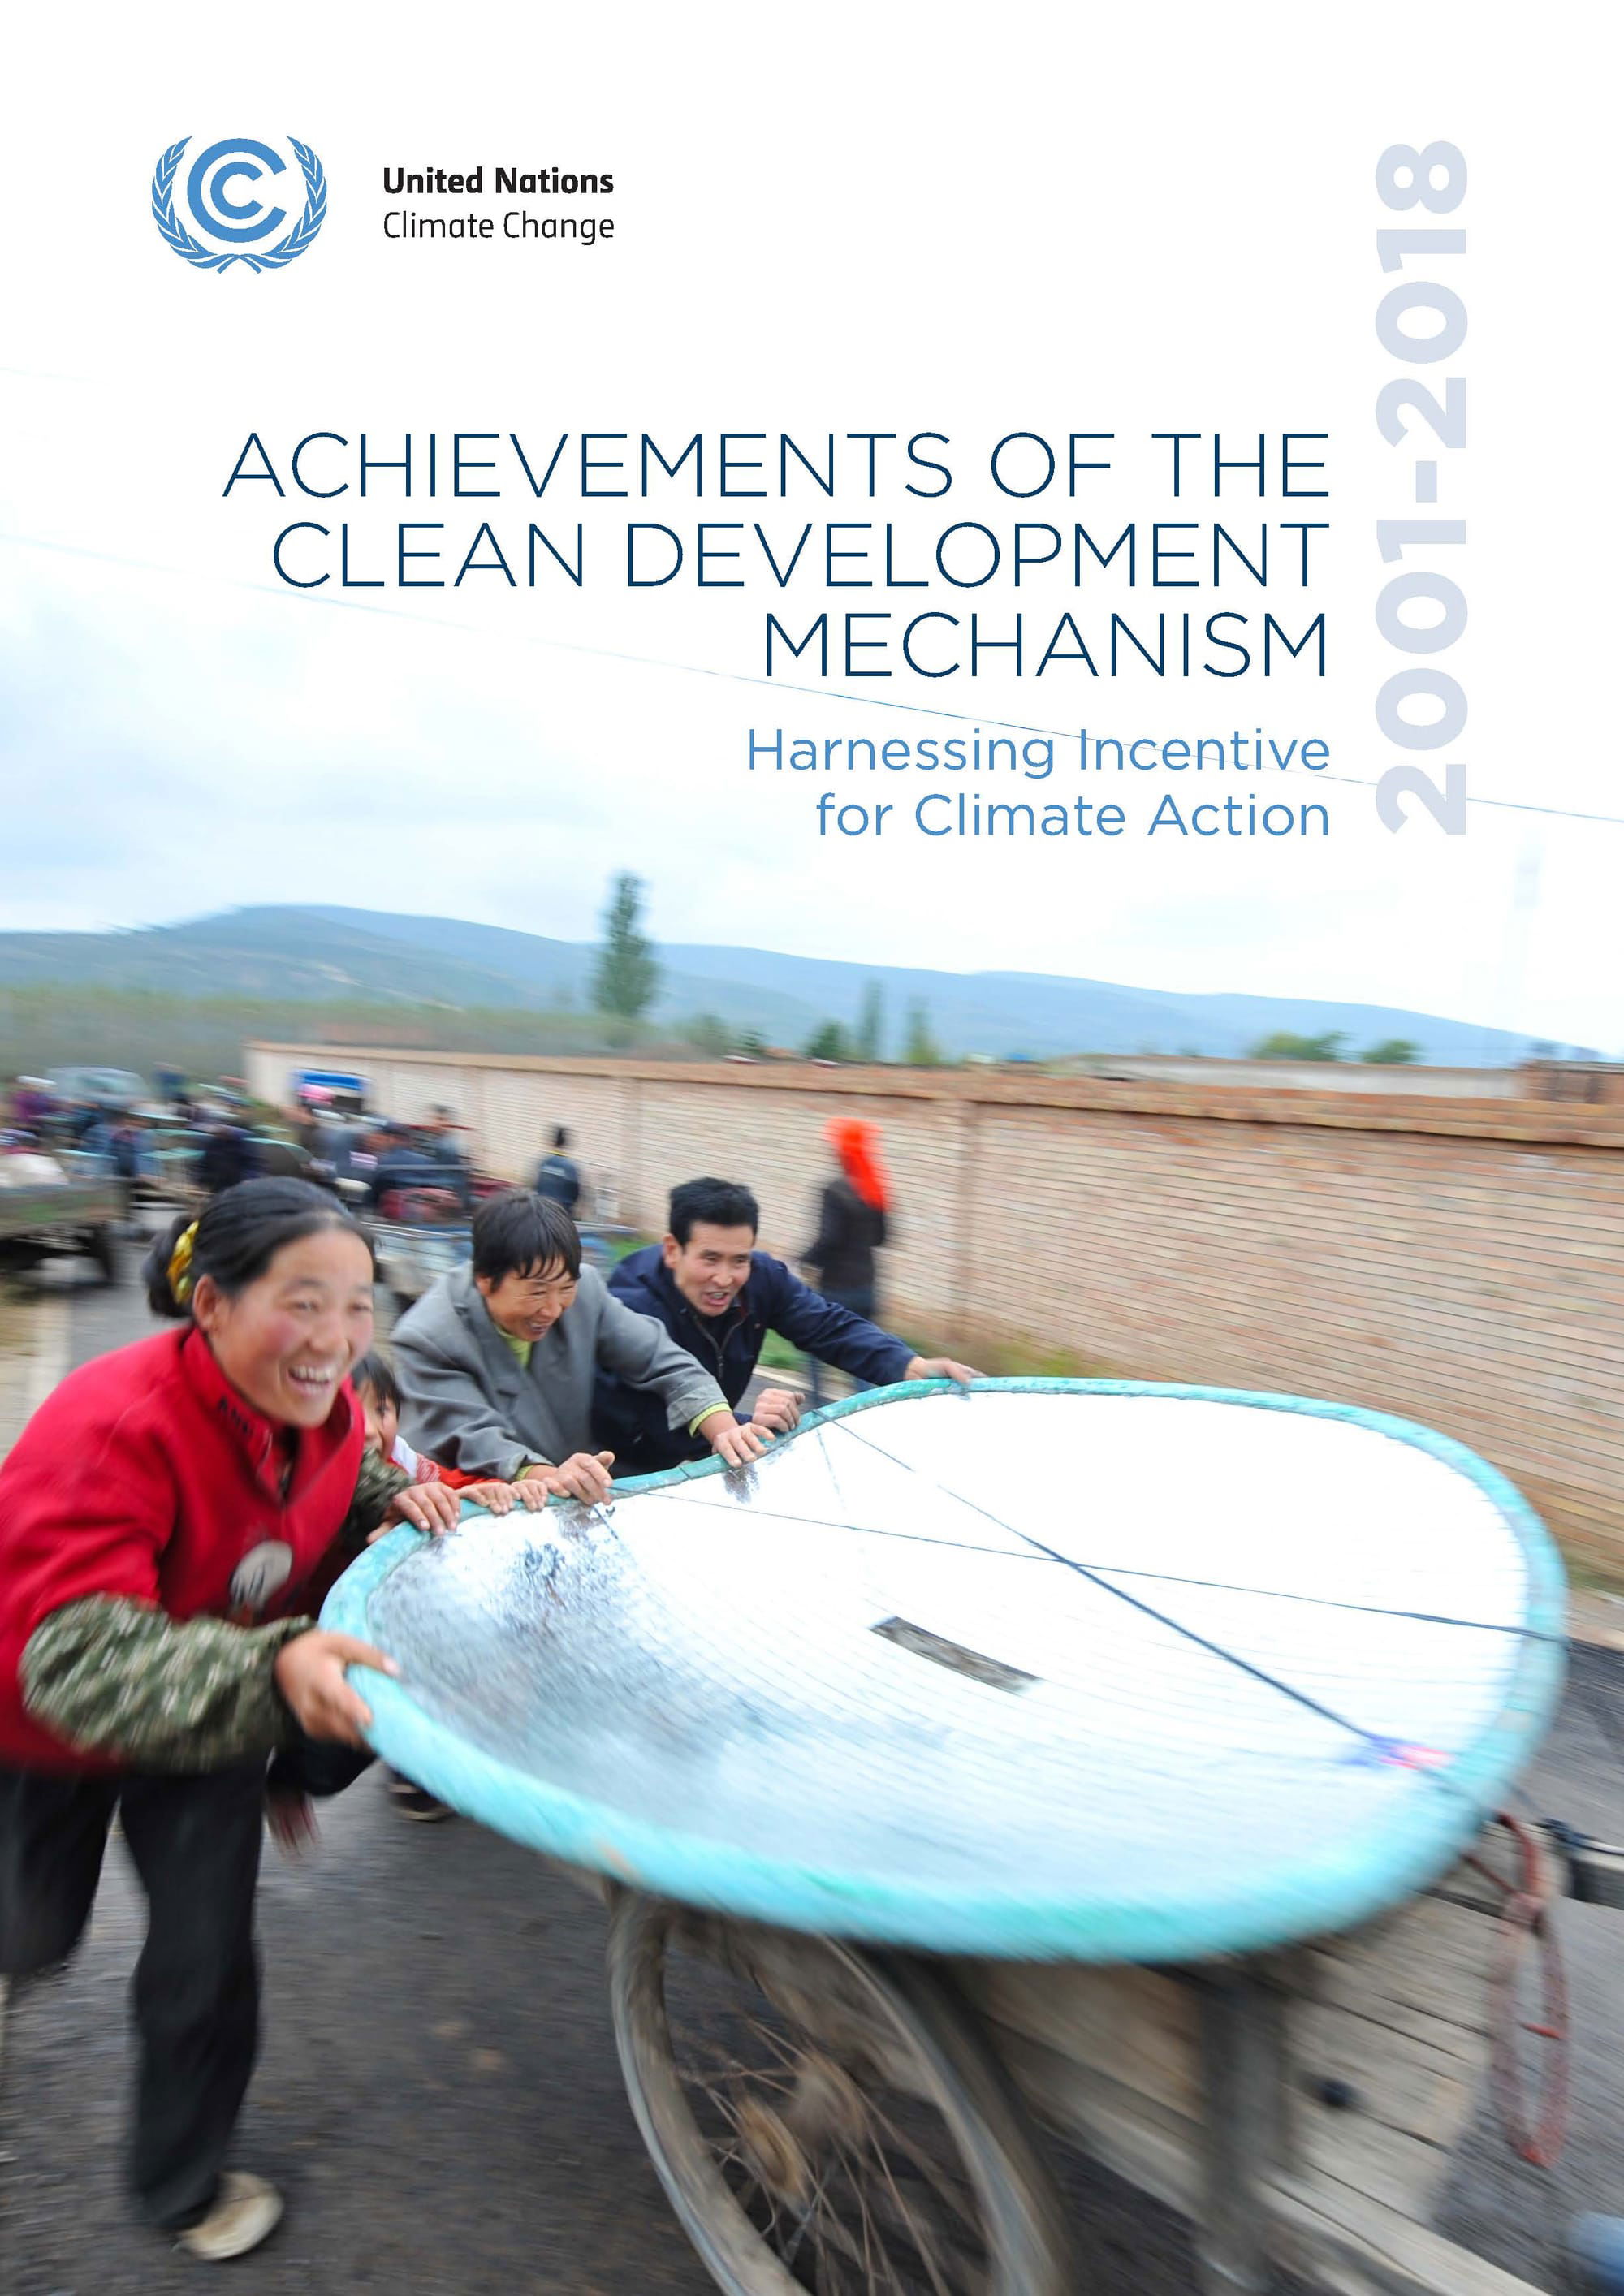 Official Report by UNFCCC summarizing the achievements of CDM